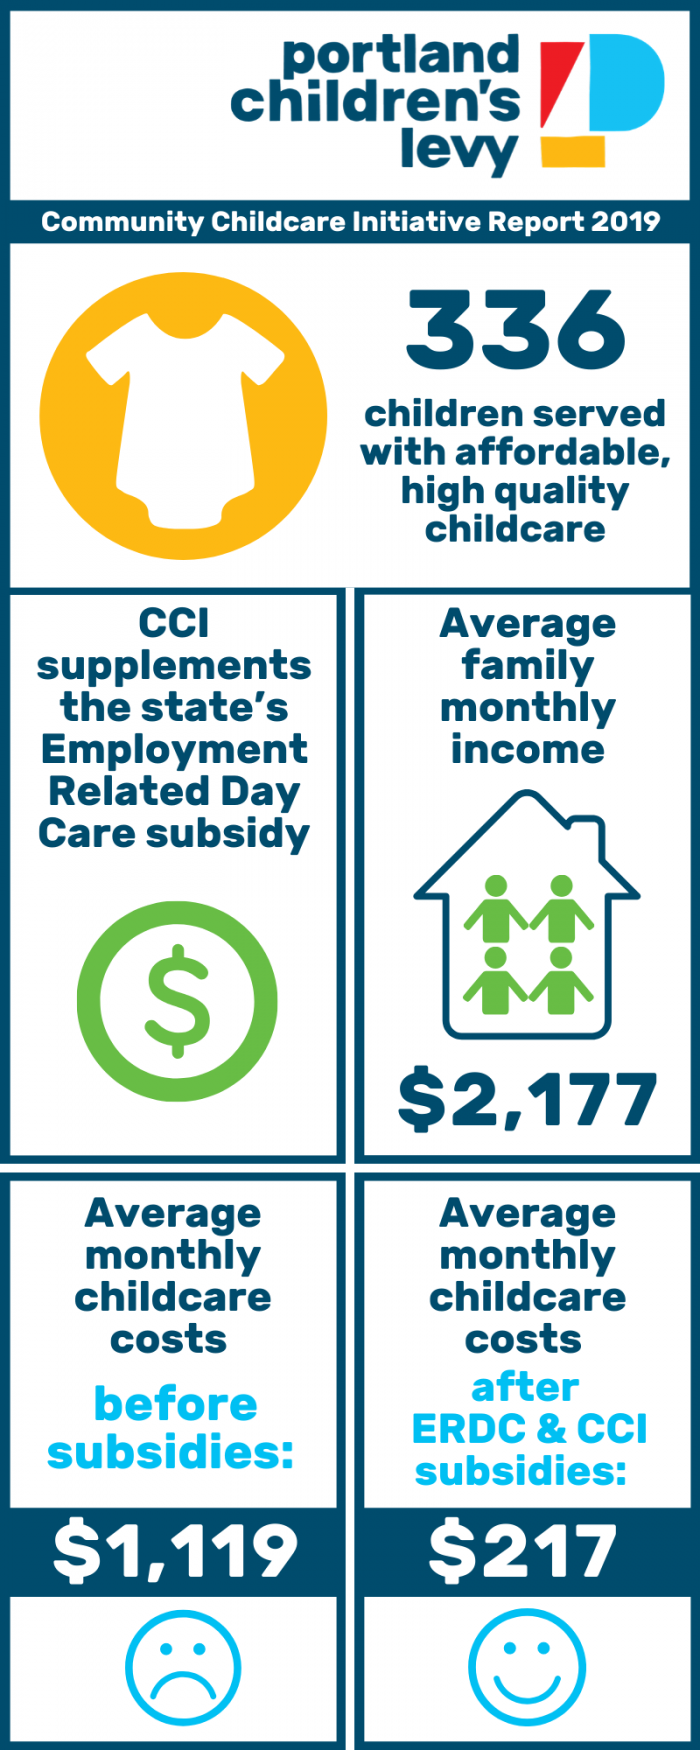 Community Childcare Initiative Report 2019 Infographic